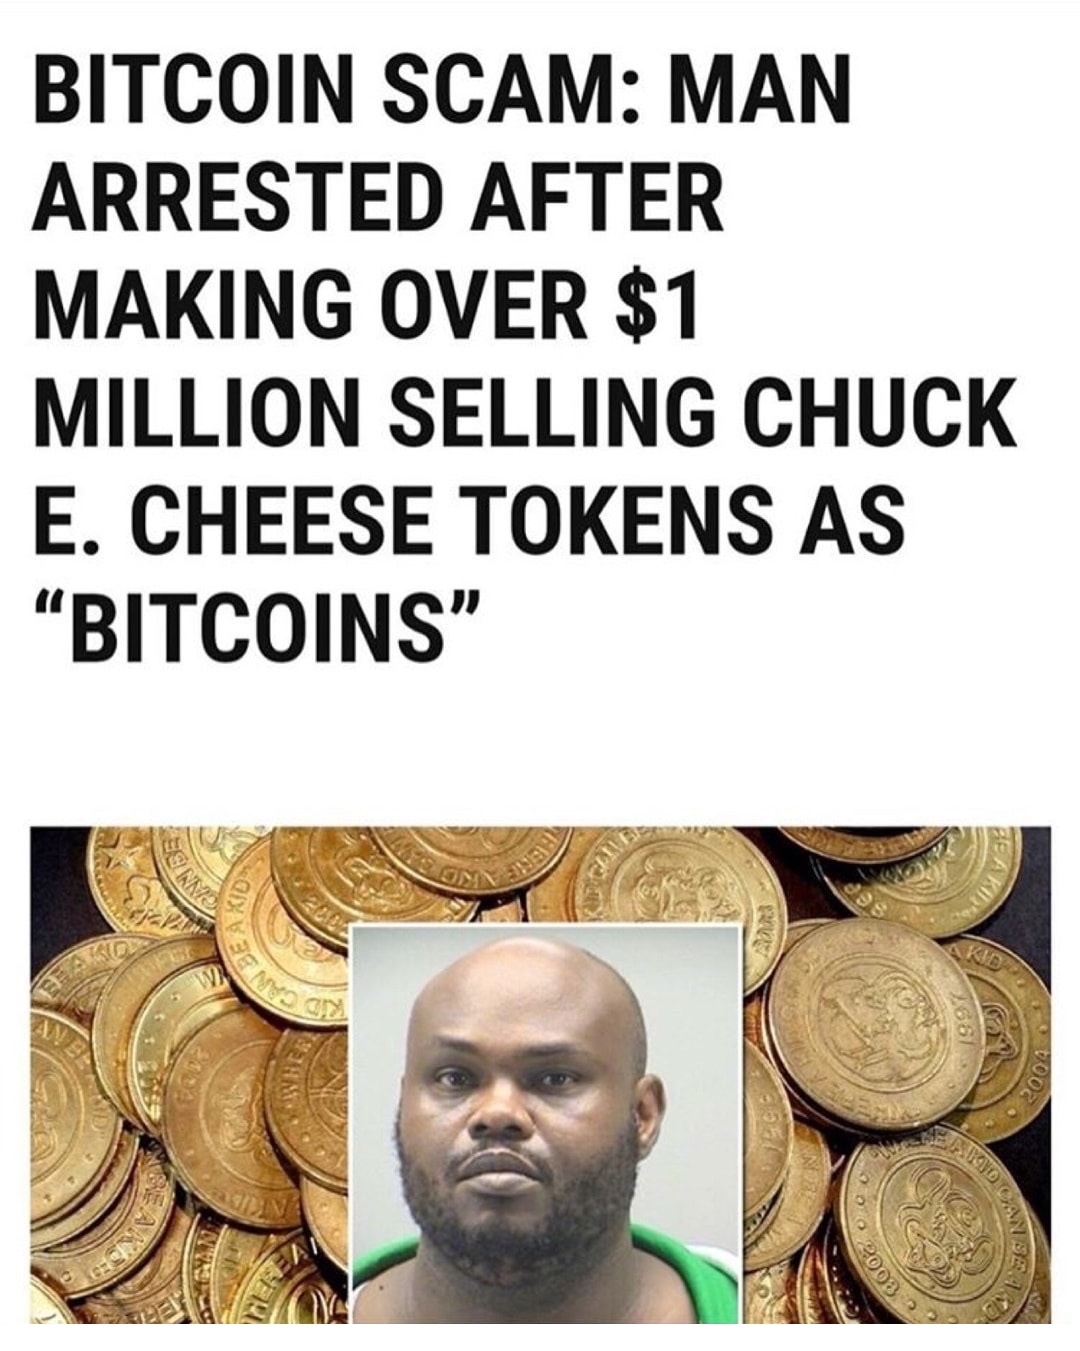 memes - chuck e cheese bitcoins - Bitcoin Scam Man Arrested After Making Over $1 Million Selling Chuck E. Cheese Tokens As "Bitcoins" Sinn Os B28 Som Co O ca Anisa 2008